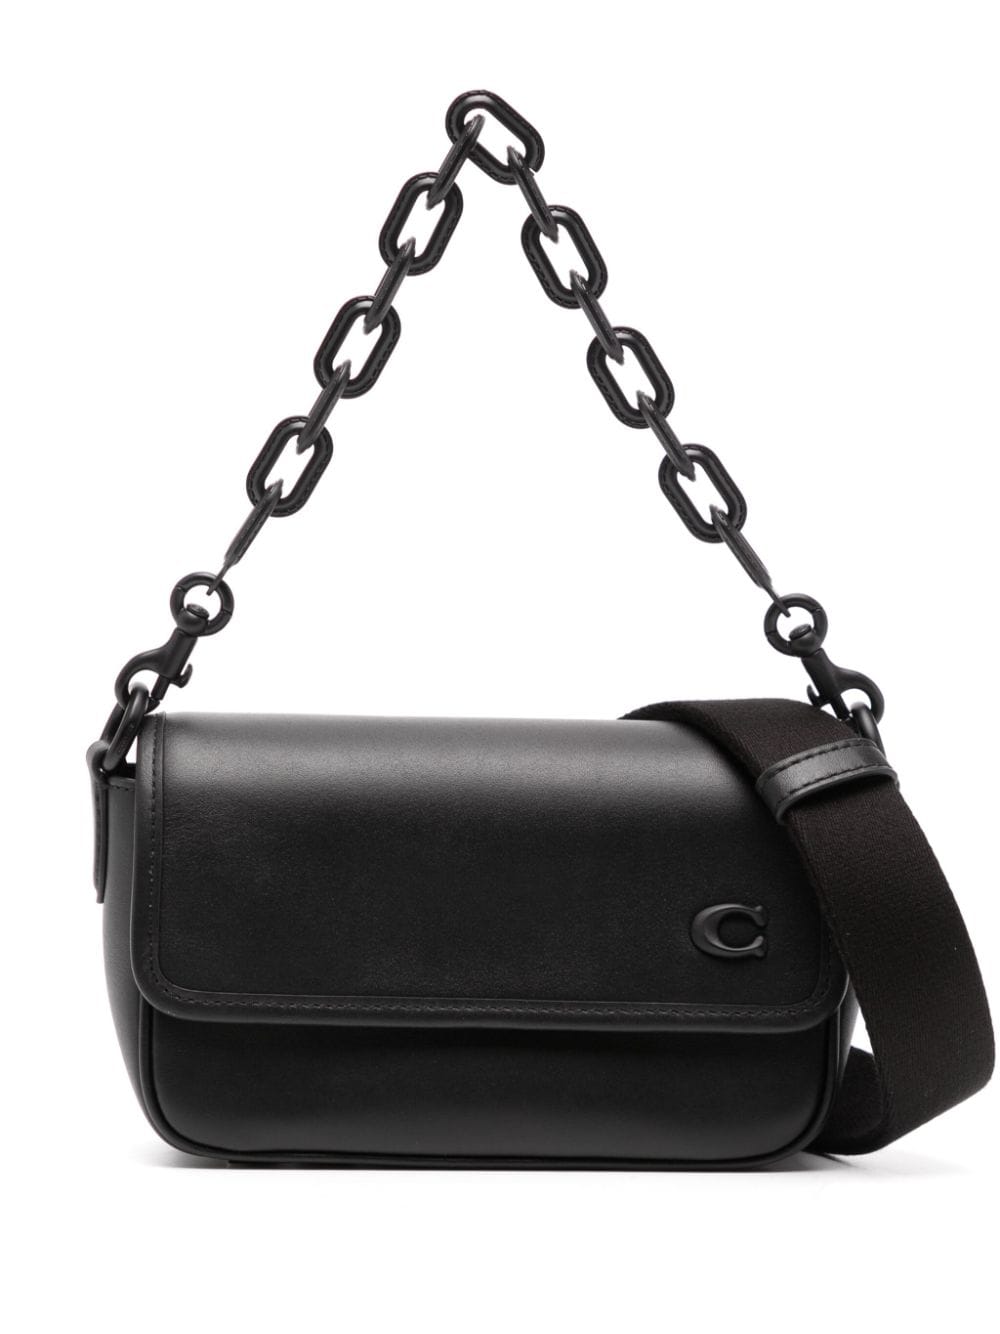 Coach chain-link strap leather shoulder bag - Black von Coach